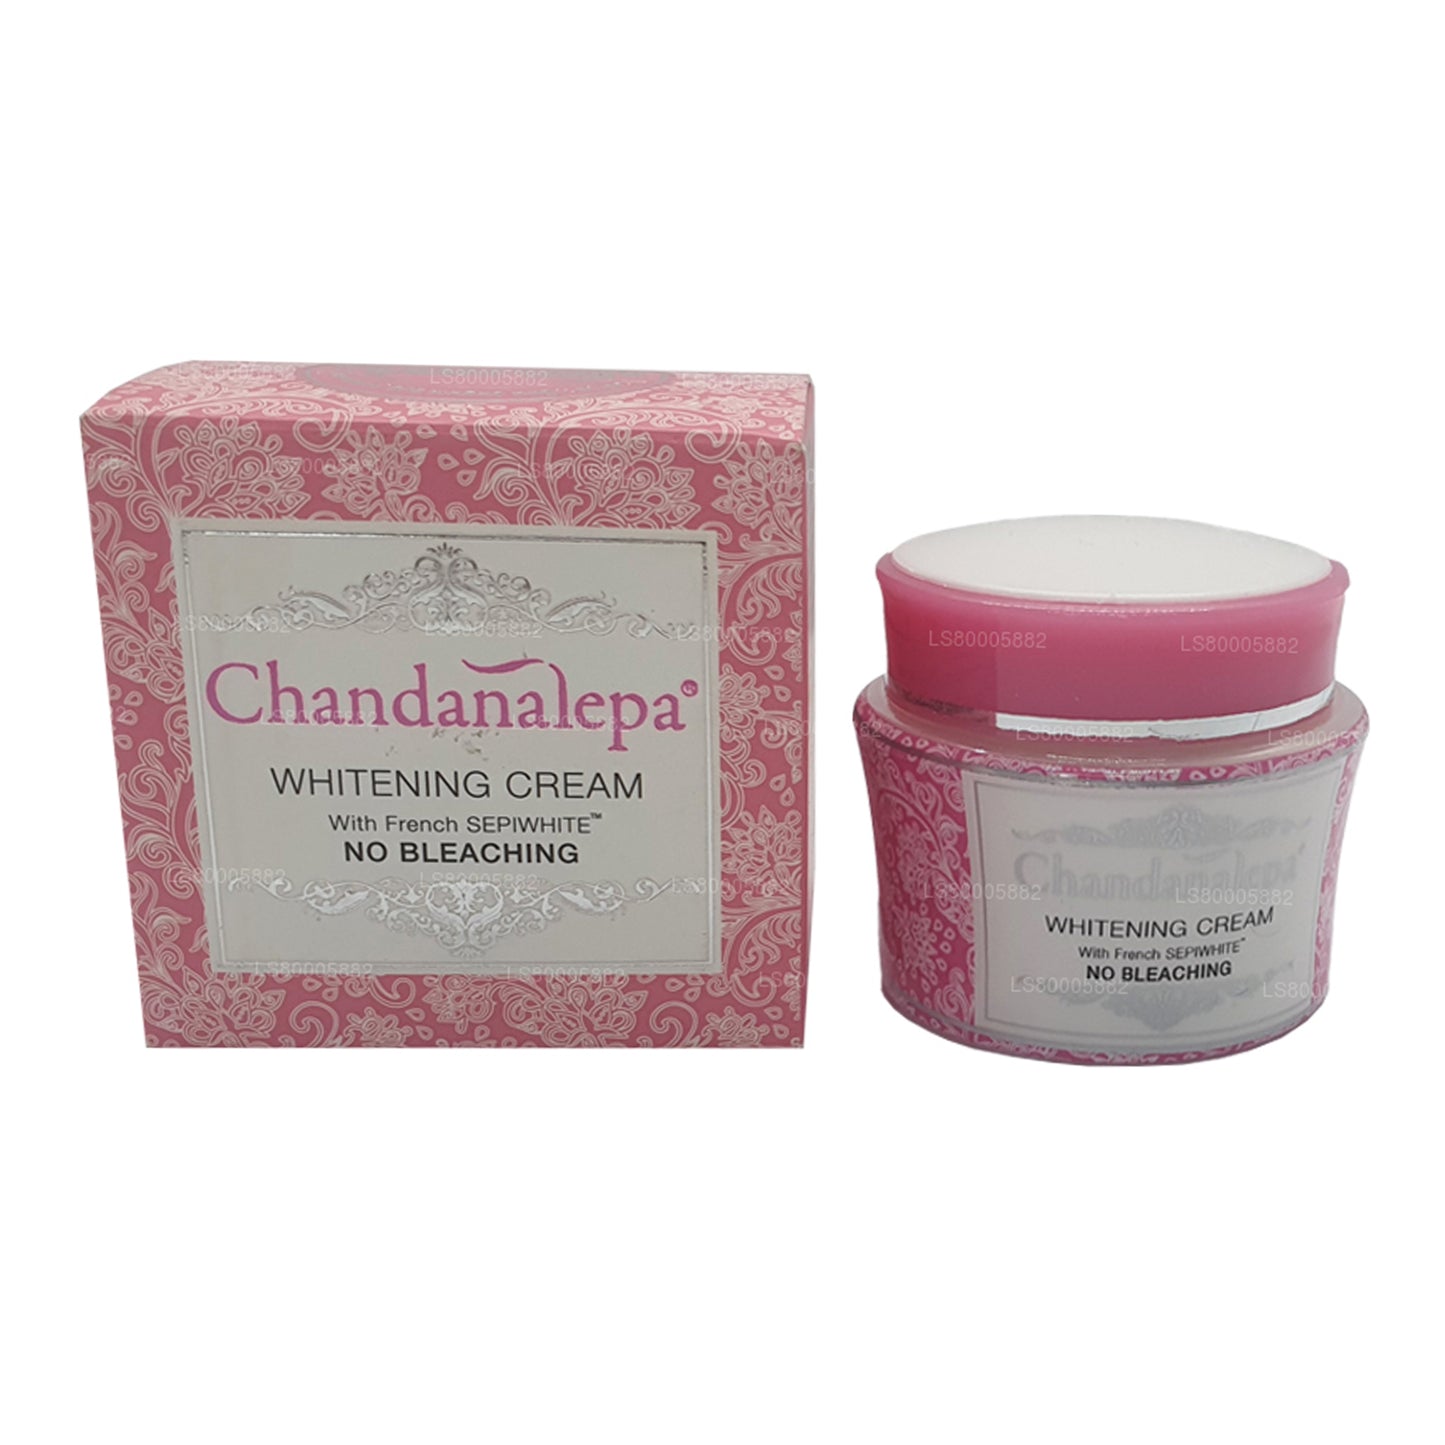 Crème blanchissante Chandanalepa (20g)